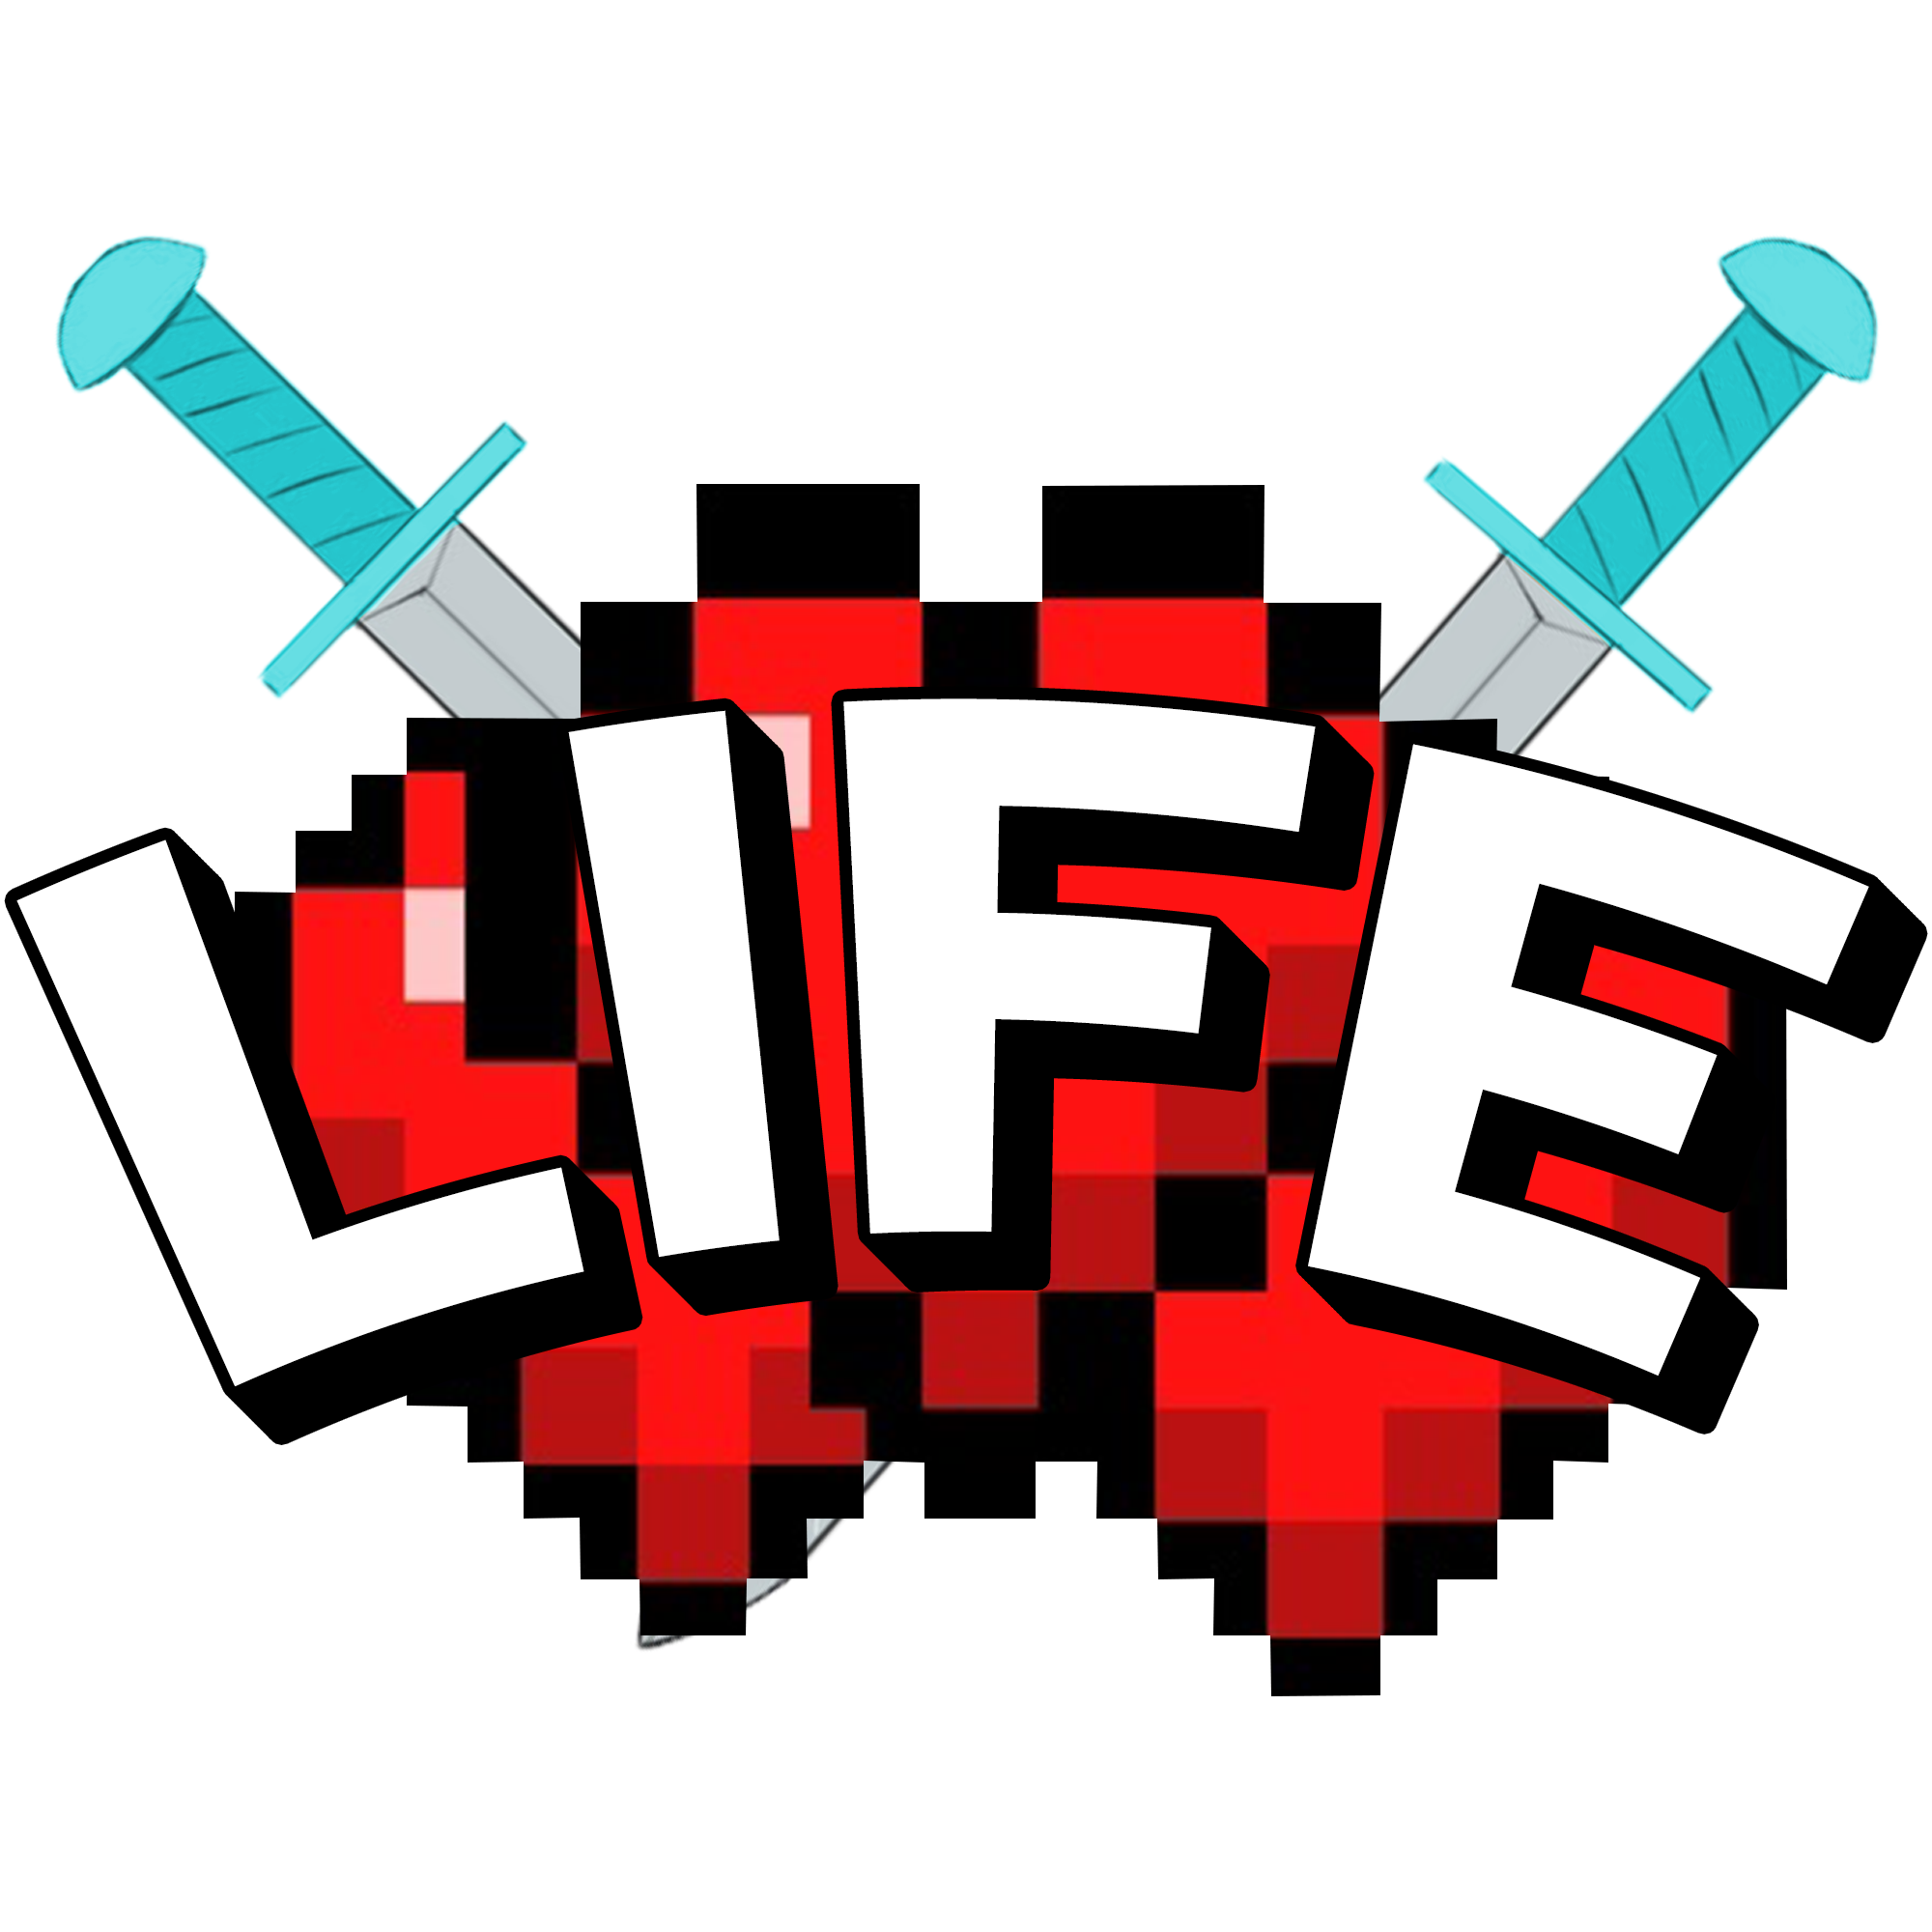 minecraft one life logo